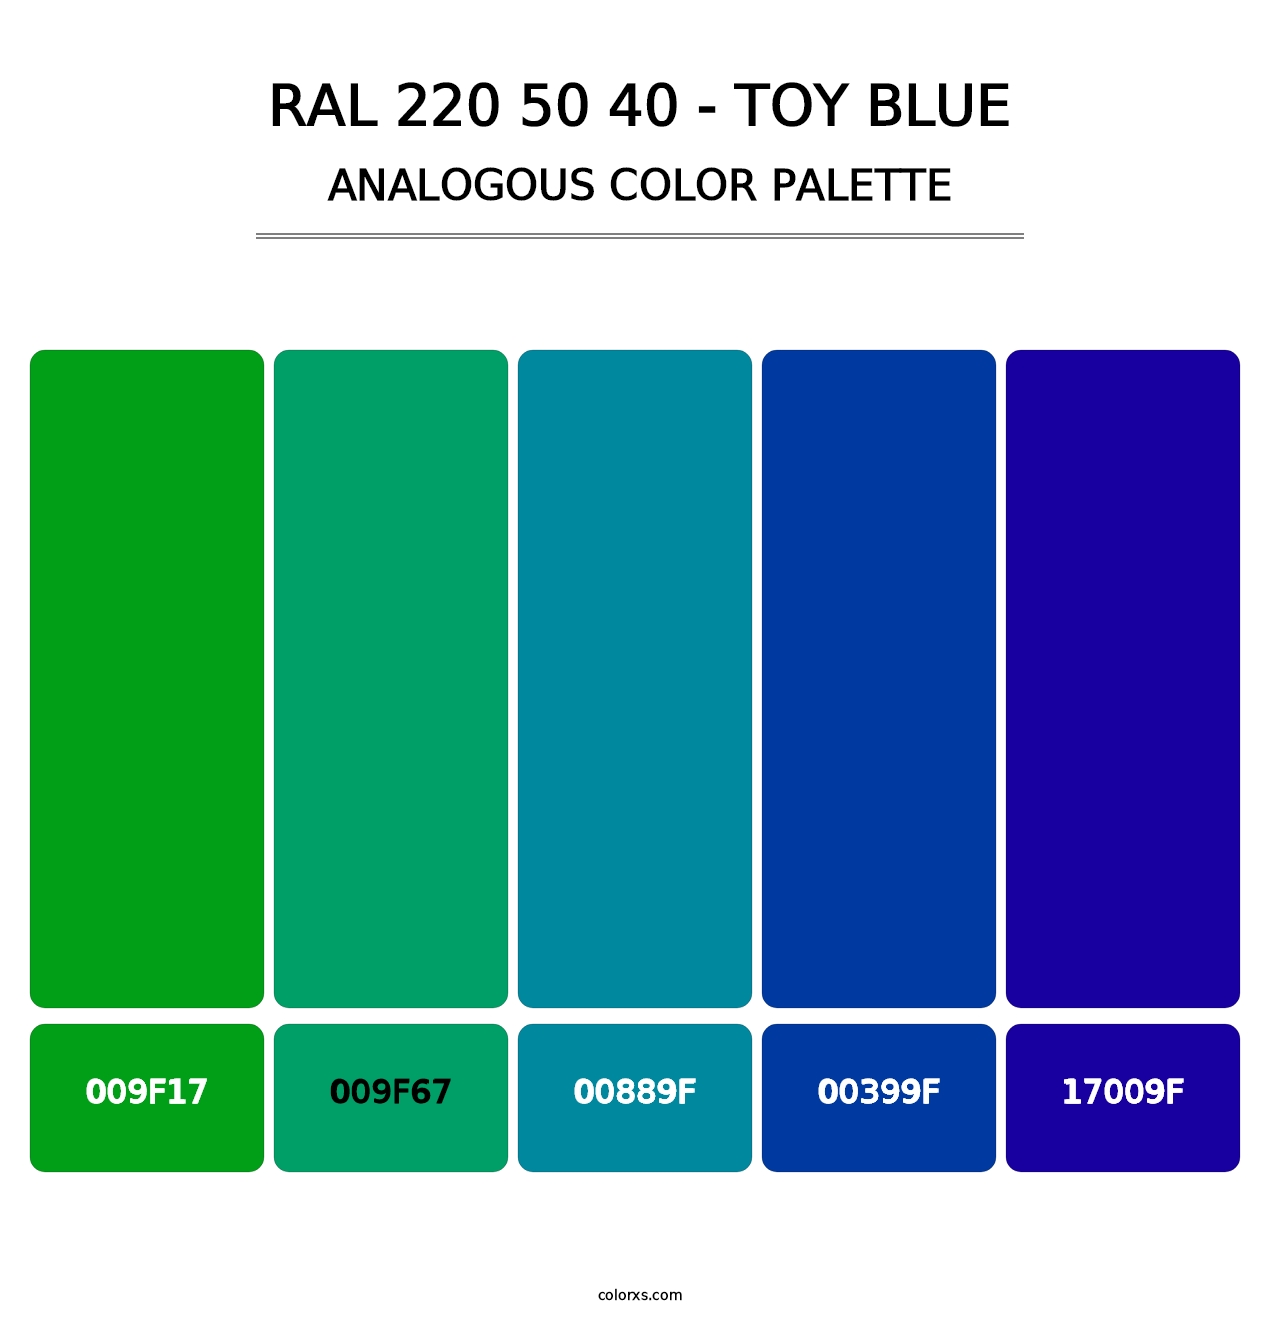 RAL 220 50 40 - Toy Blue - Analogous Color Palette